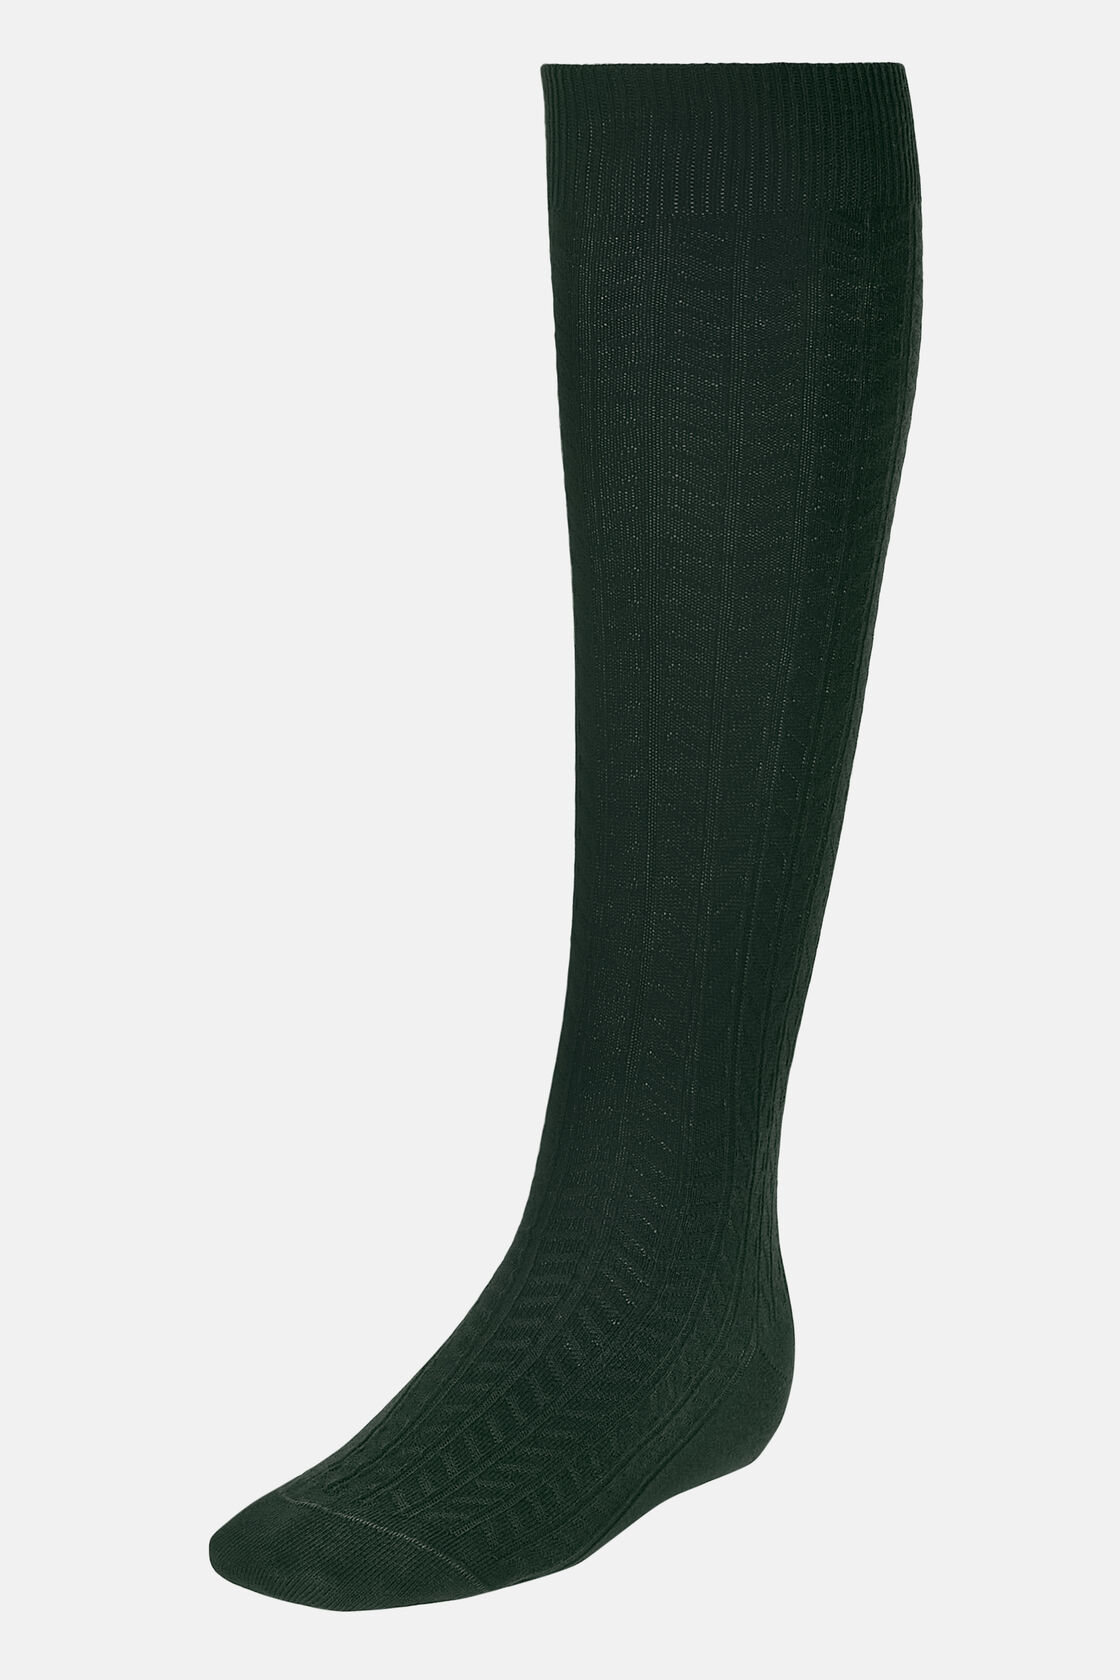 Cotton Blend Texture Effect Socks, Military Green, hi-res